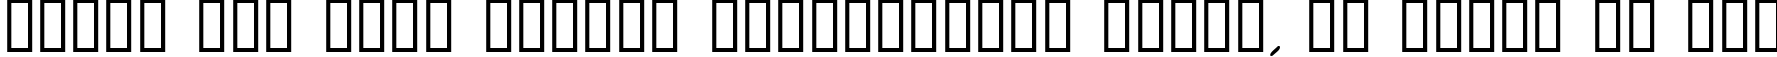 Пример написания шрифтом SF Scribbled Sans SC Bold Italic текста на русском